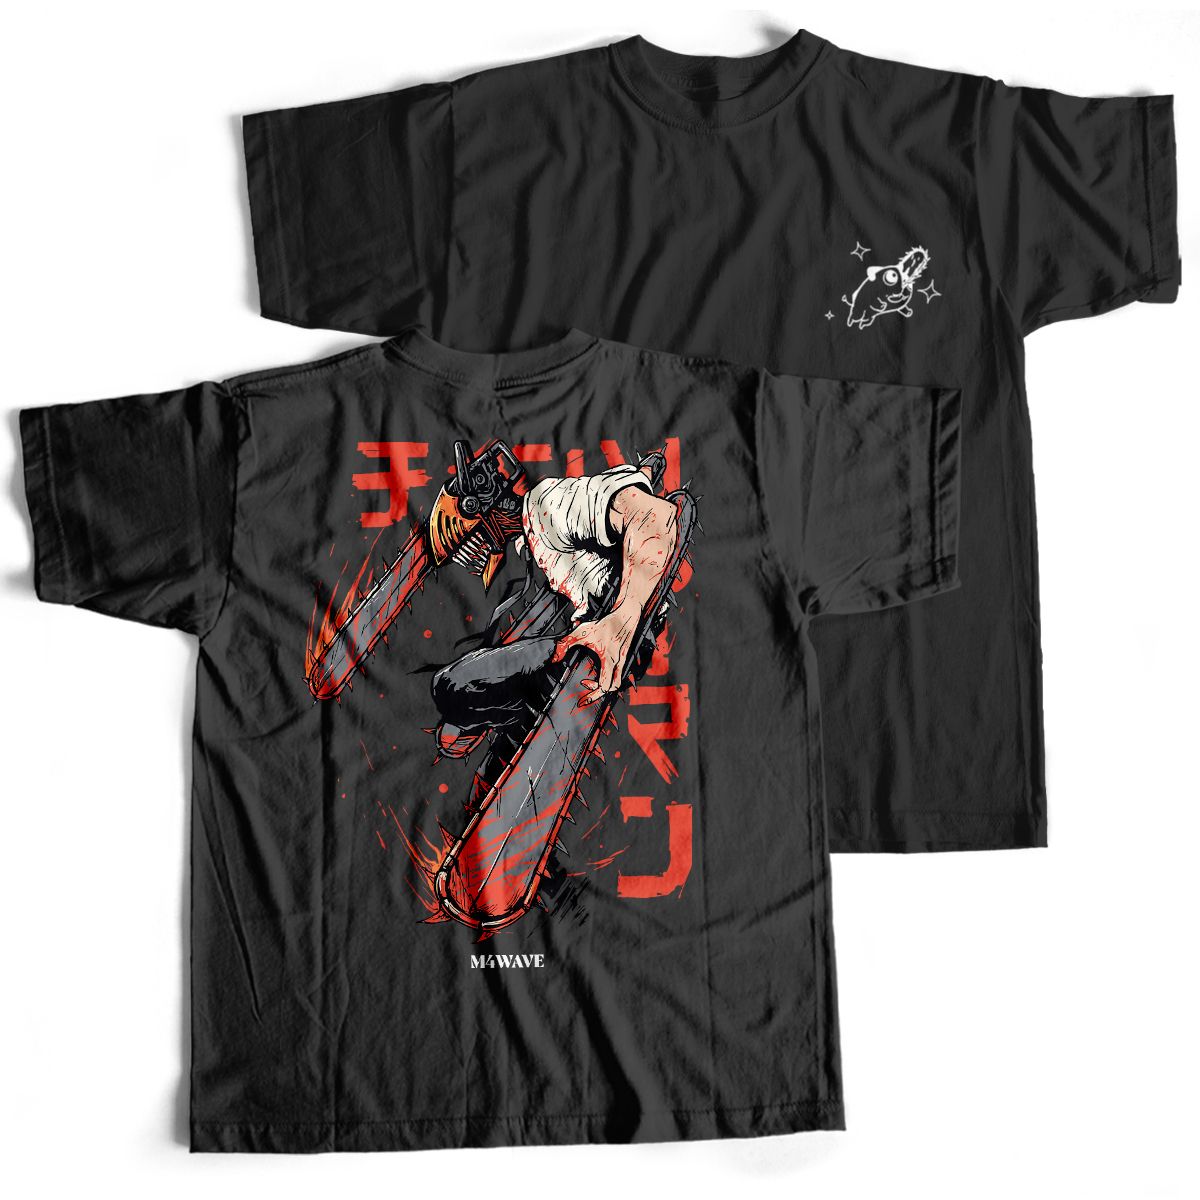 Nome do produto: Camiseta Preta - Chainsaw Demon (Frente/Costas)